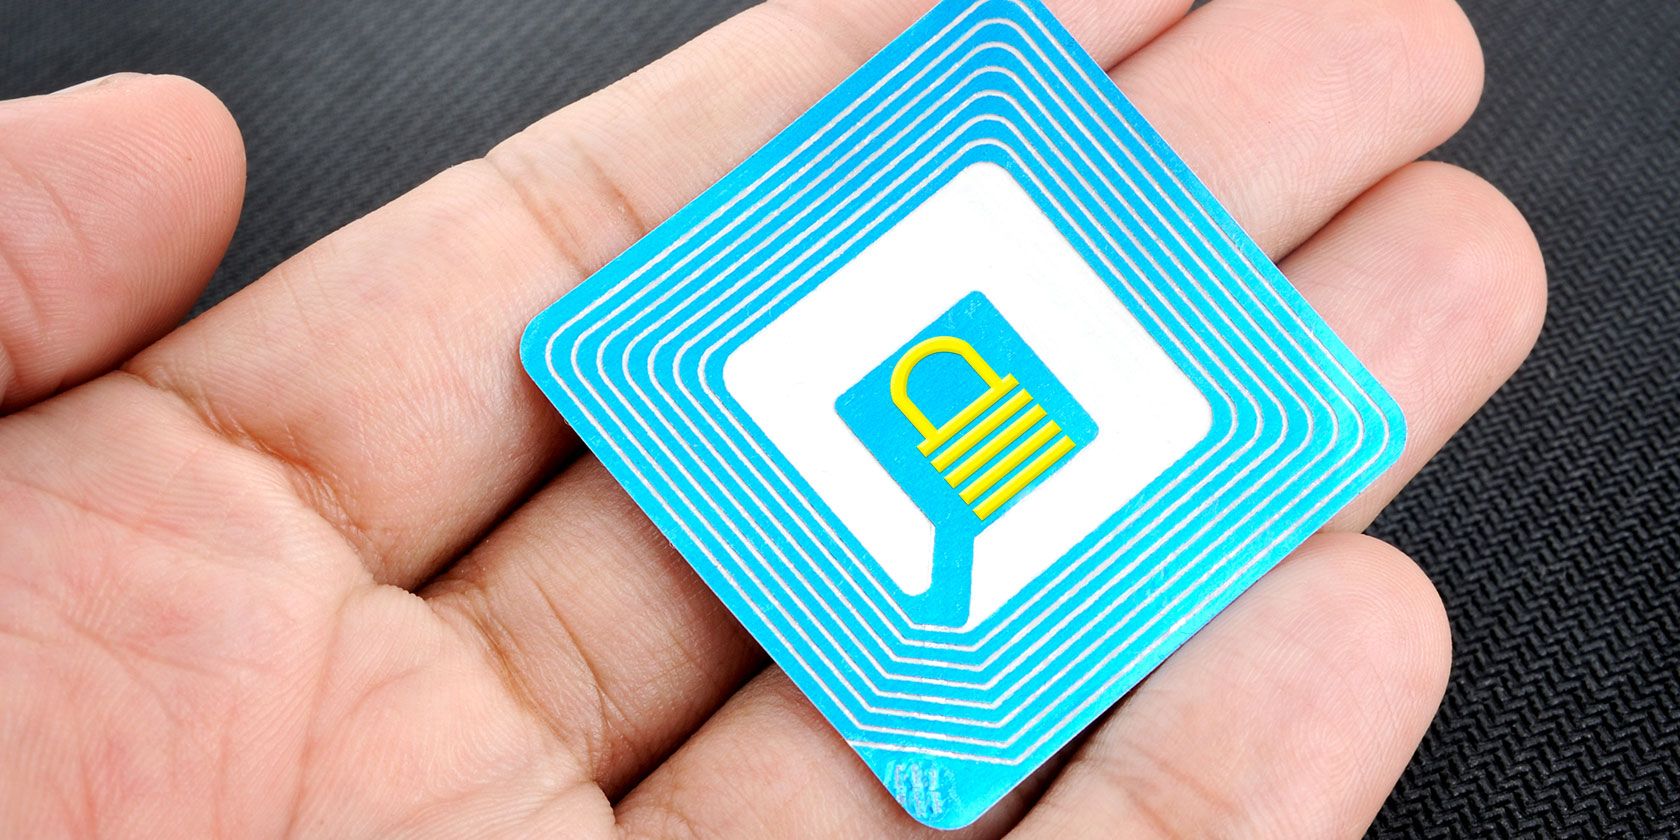 Toward hack-proof RFID chips, MIT News